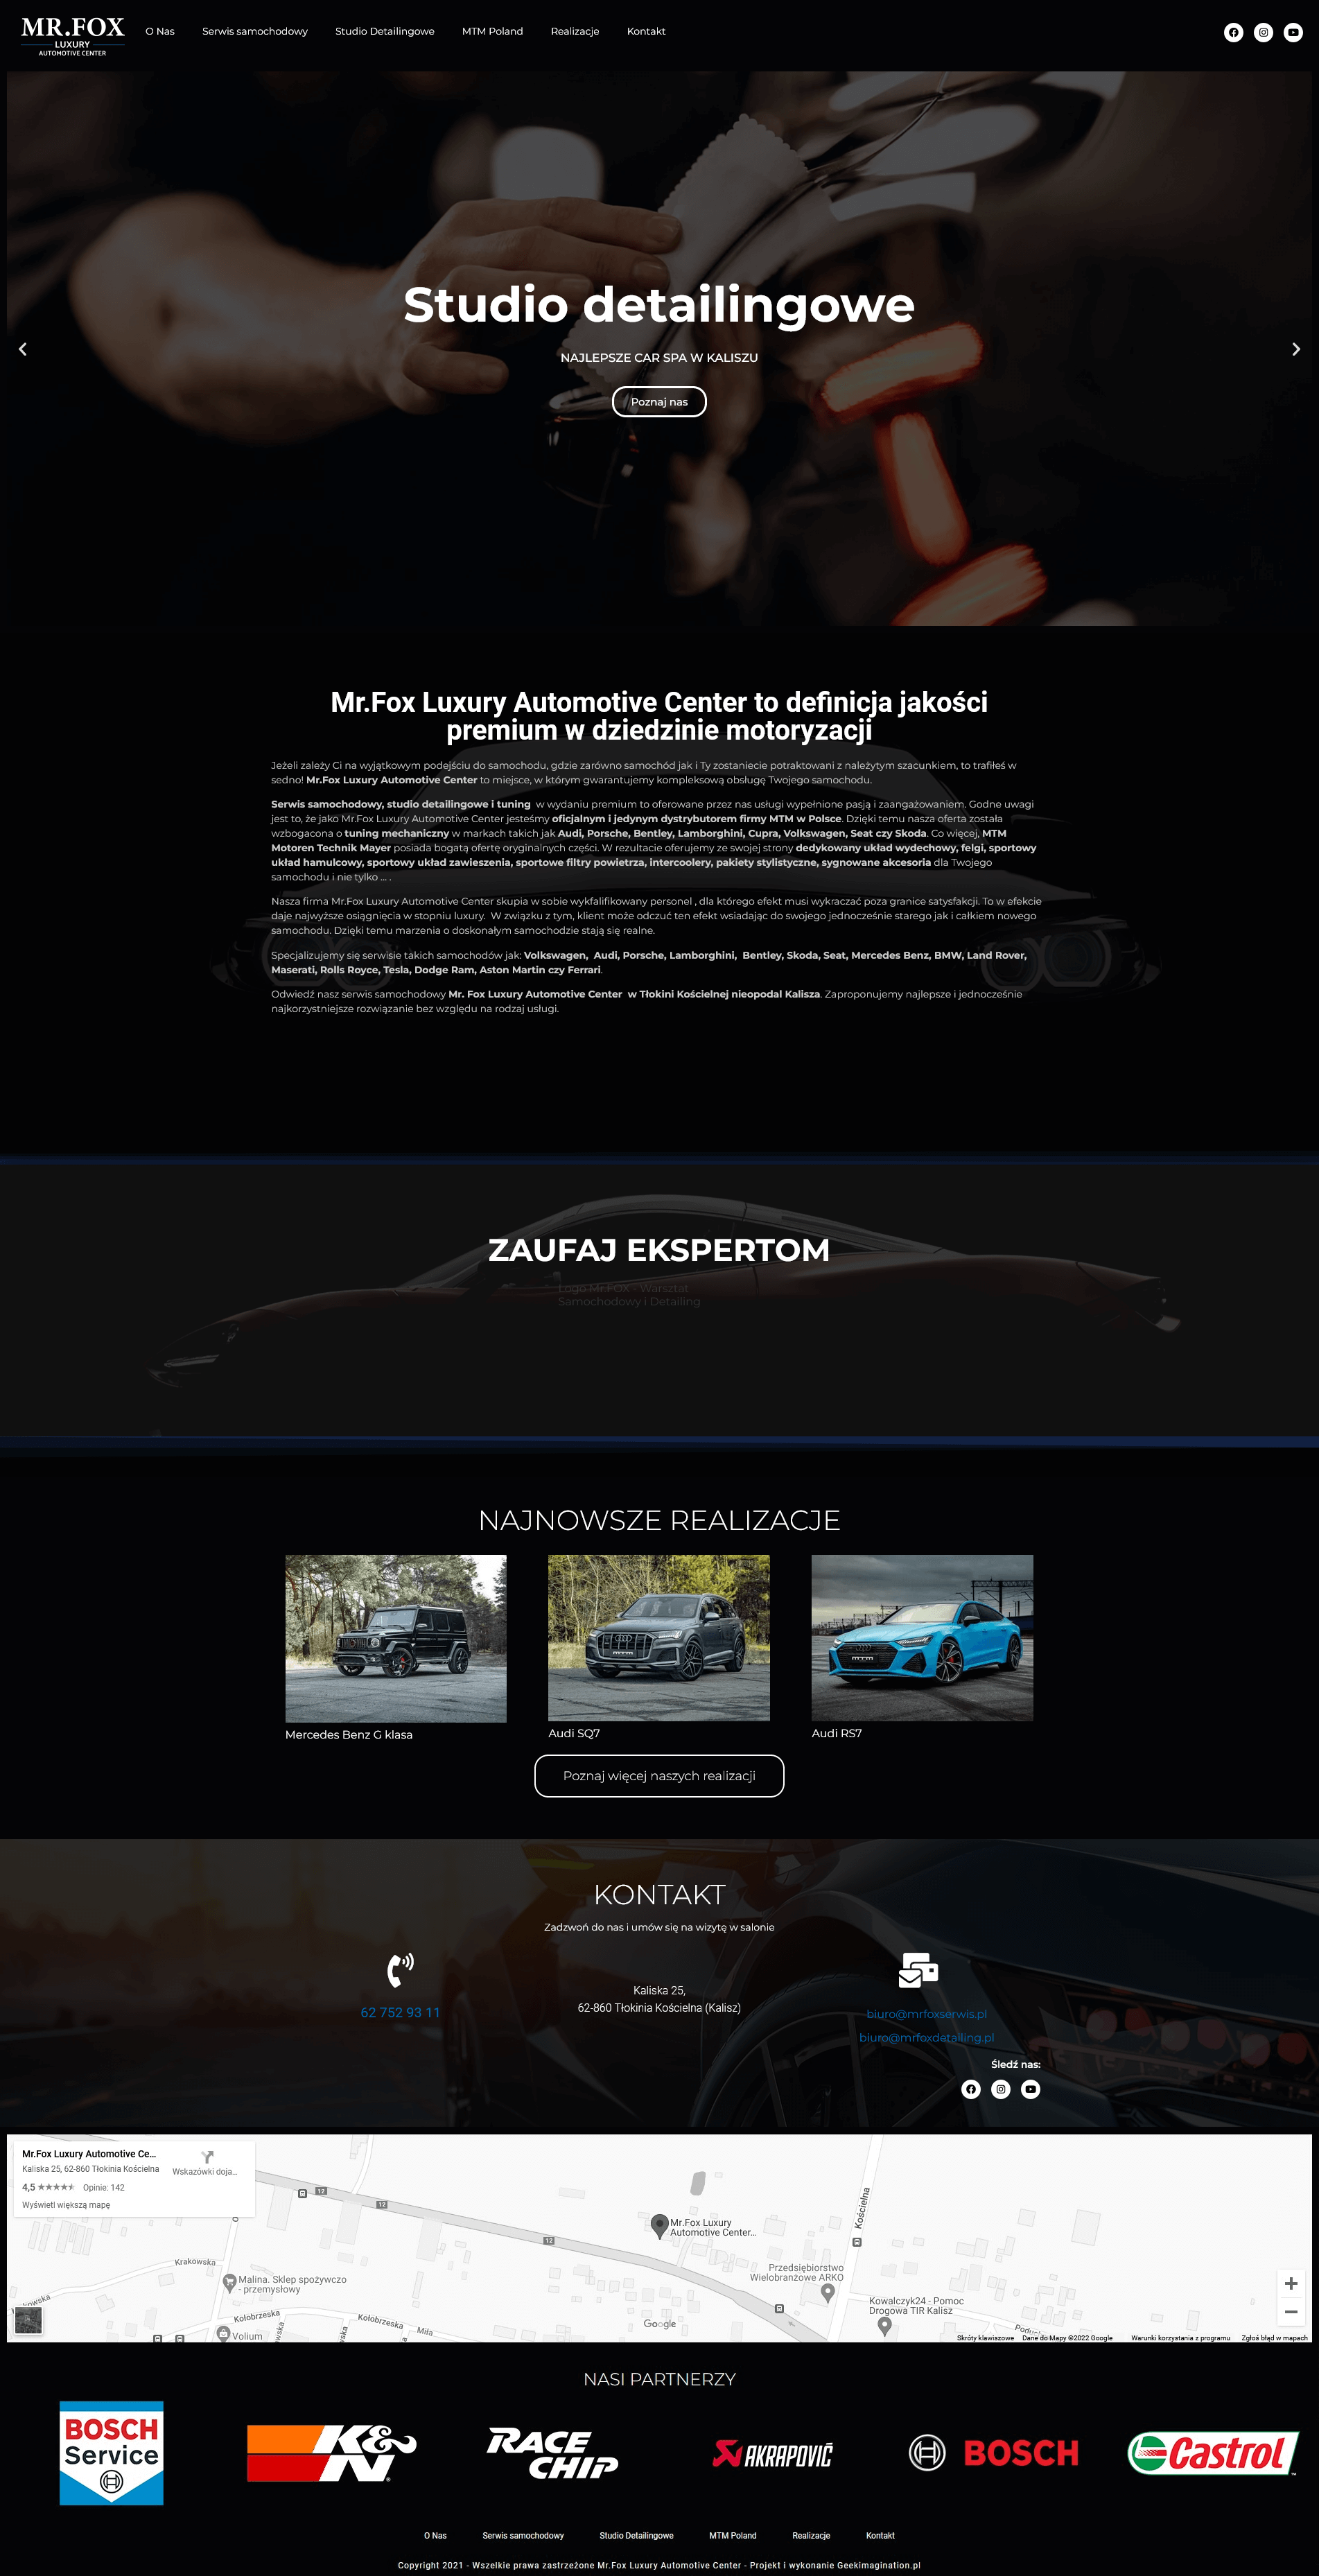 Mr.Fox Luxury Automotive Center - geek imagintion stron